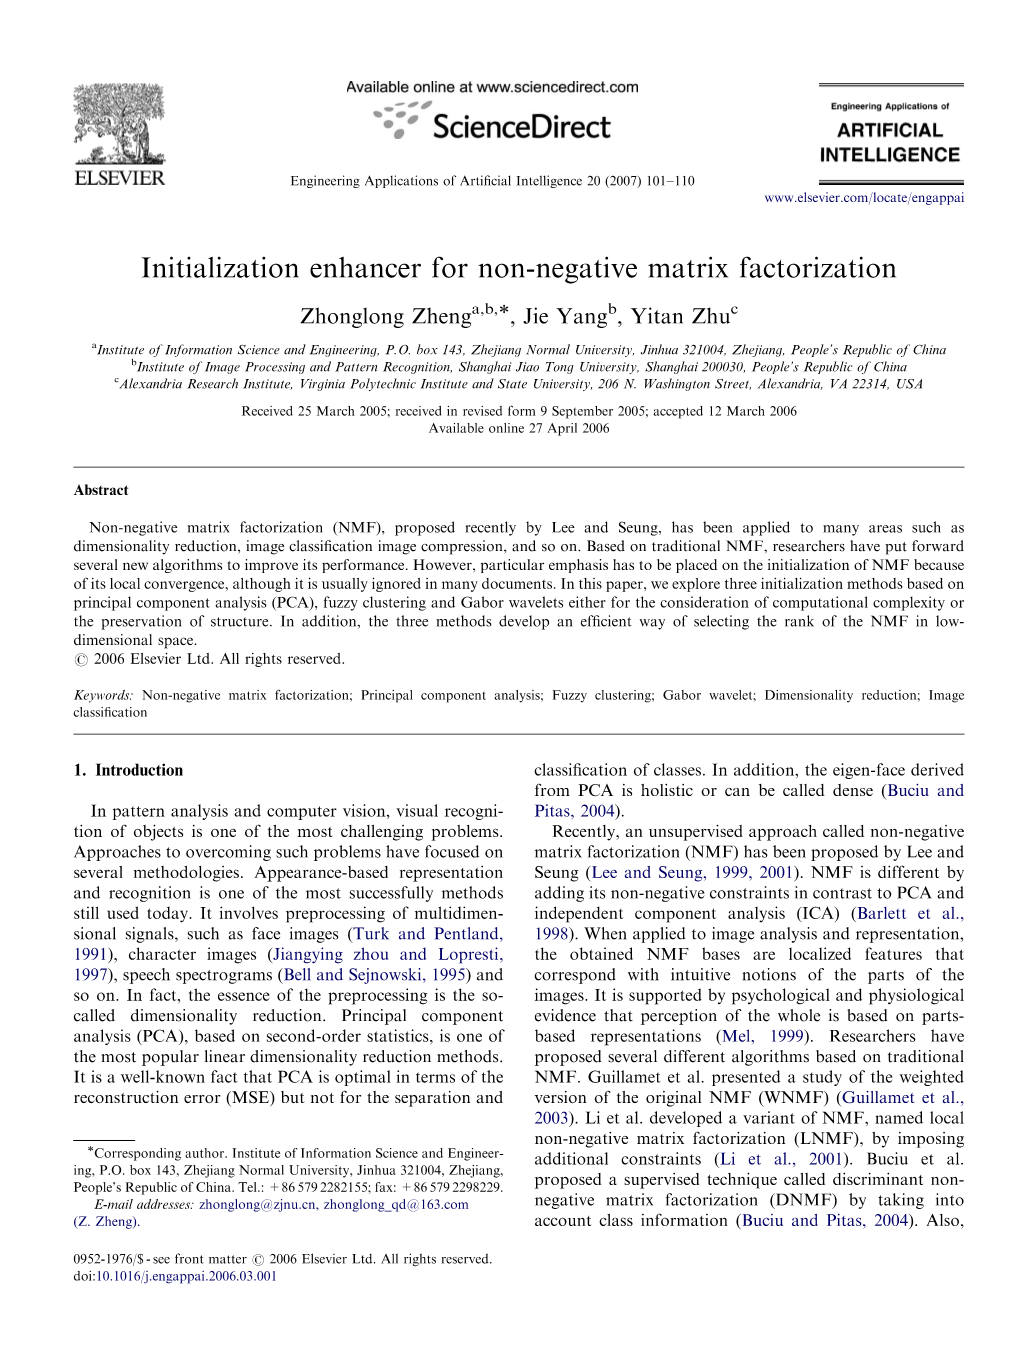 Initialization Enhancer for Non-Negative Matrix Factorization